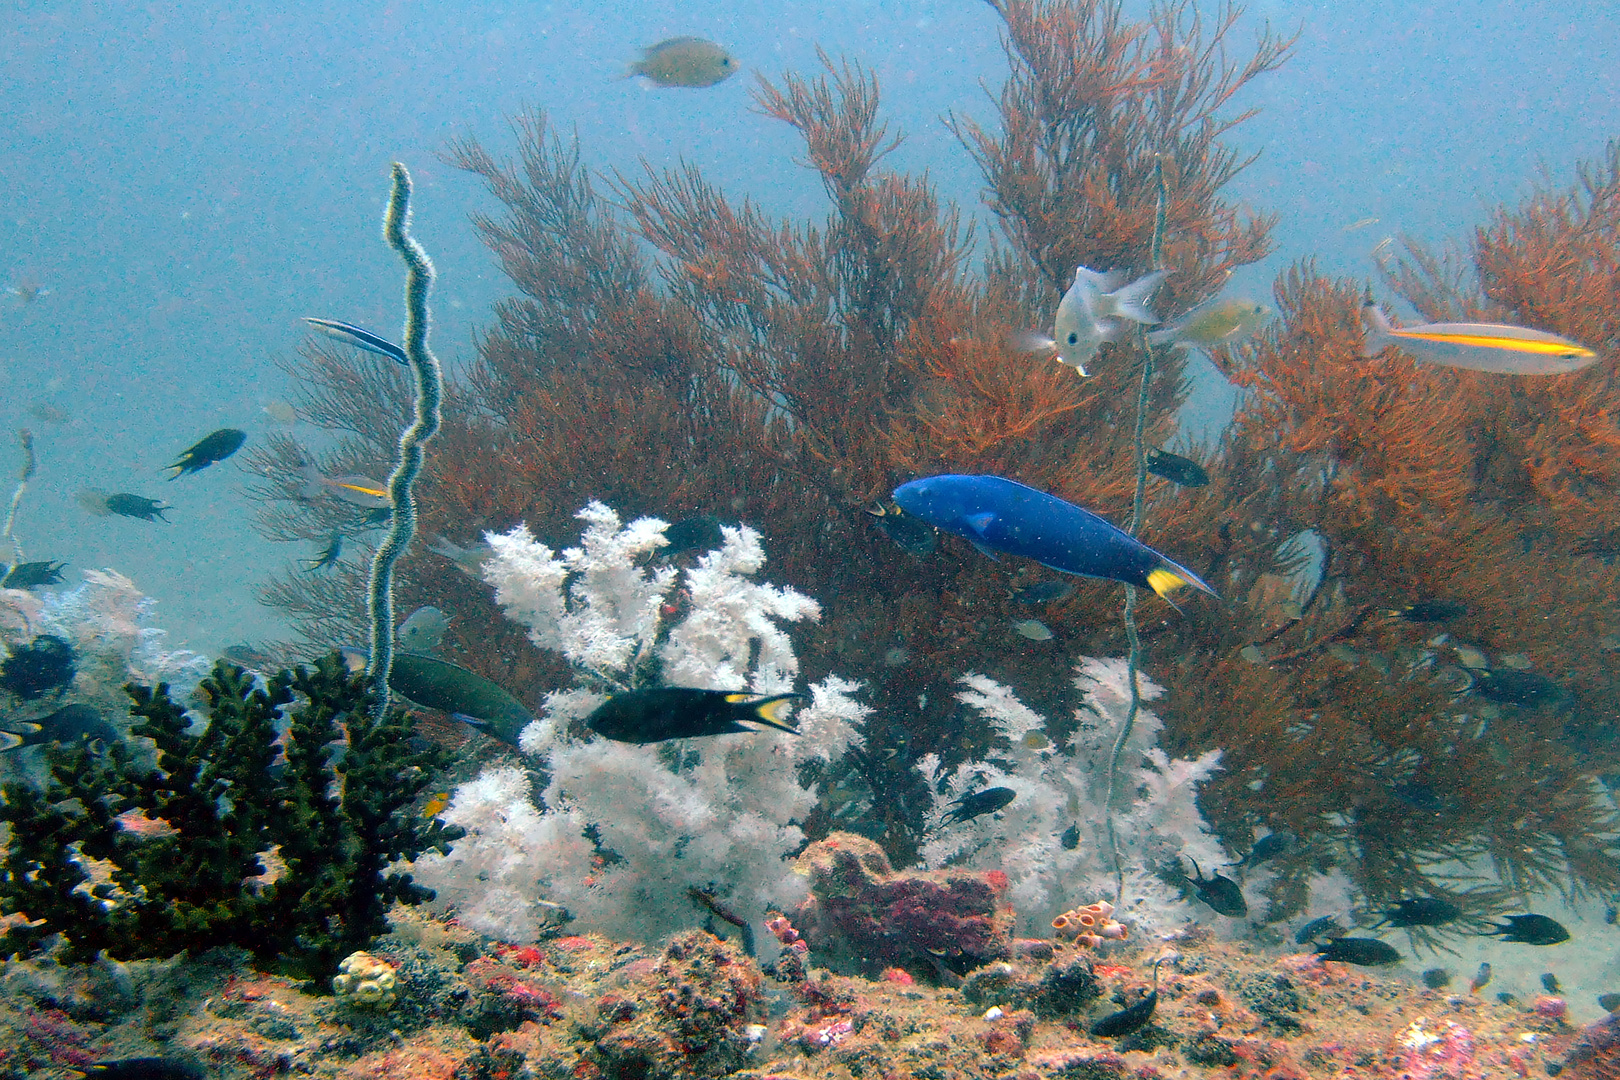 Fish life under soft corals